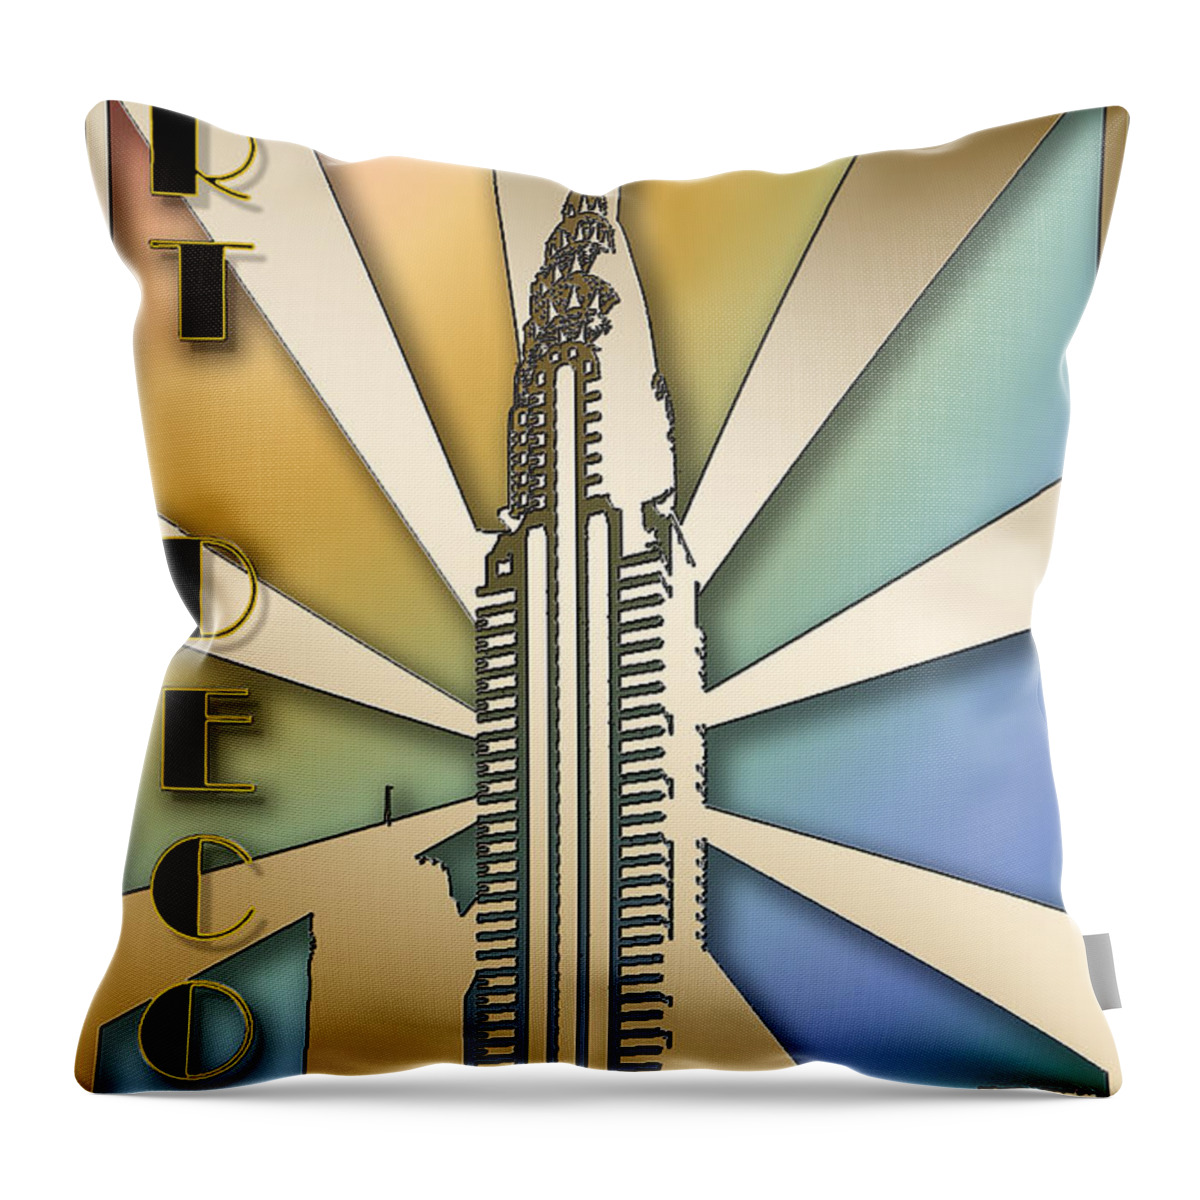 Chrysler Throw Pillow featuring the digital art Chrysler Building by Chuck Staley